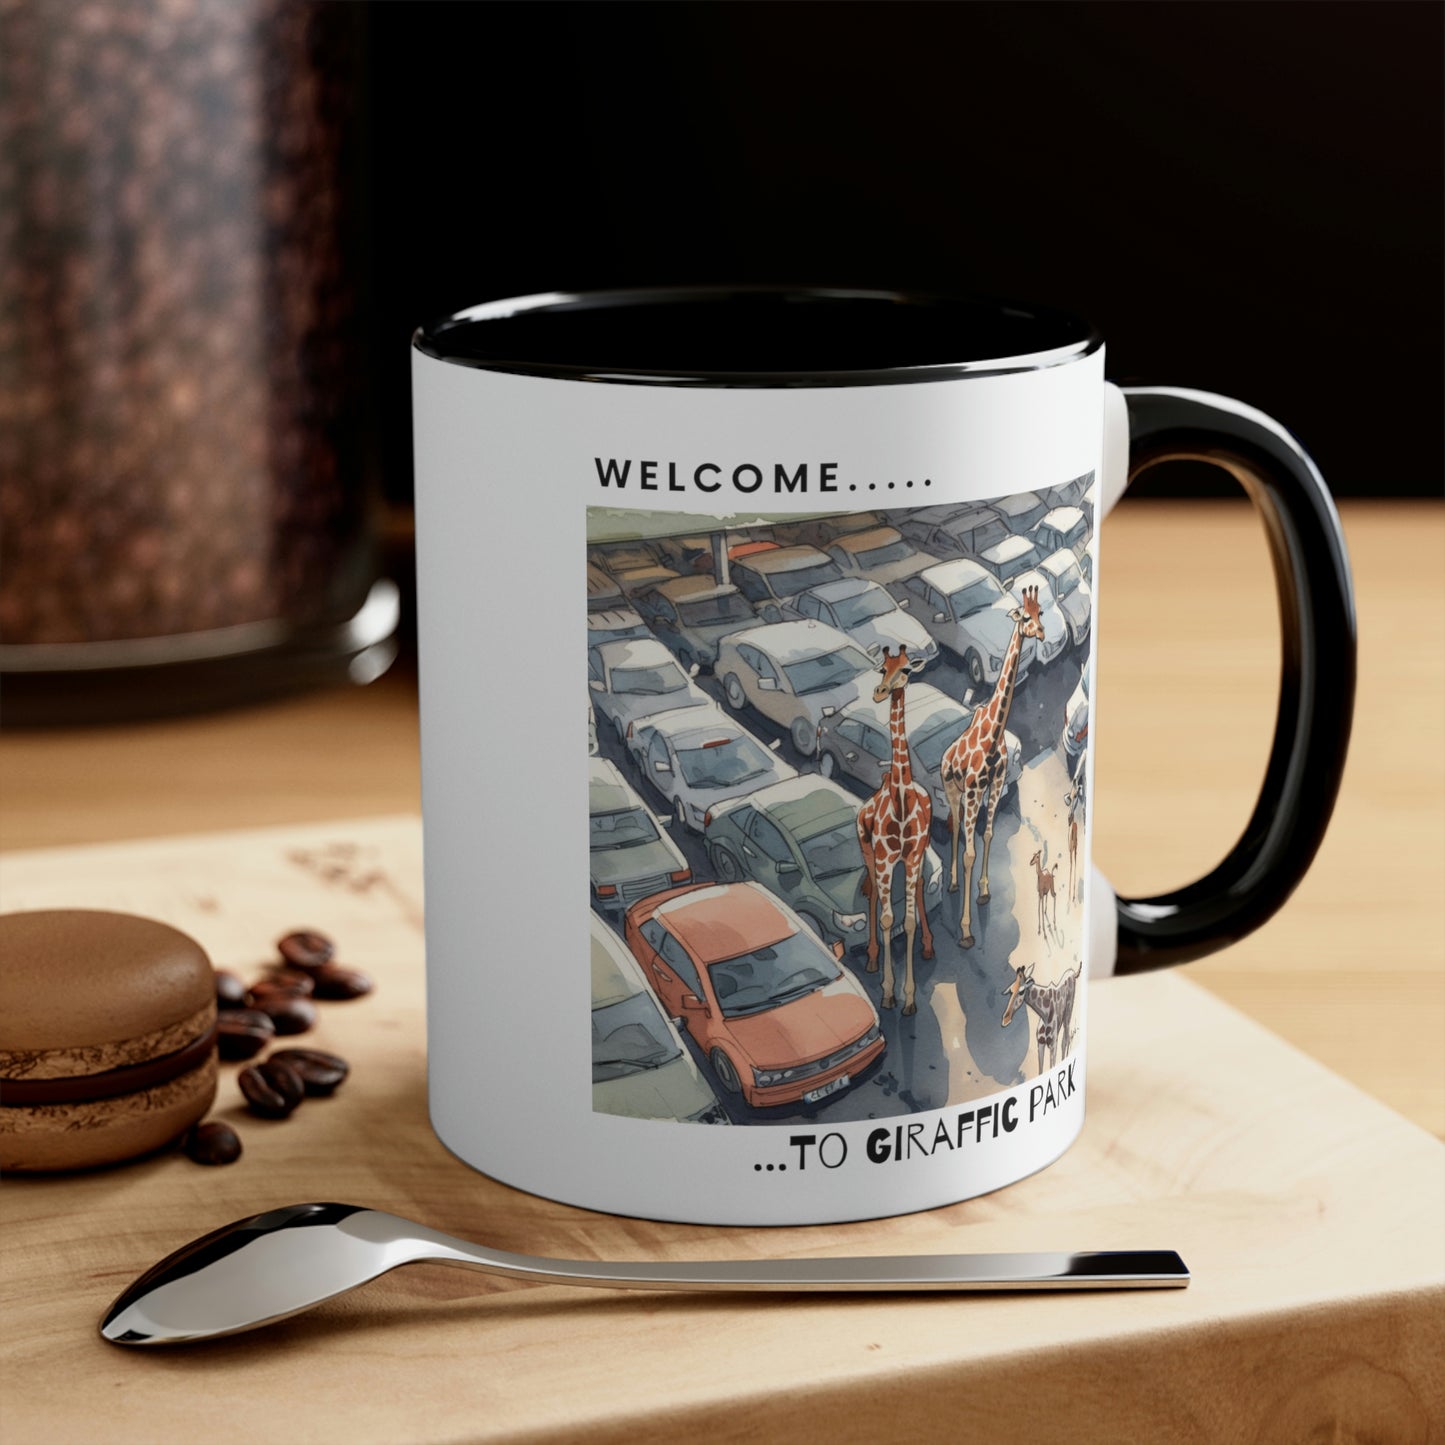 Giraffic Park - Dad Joke Accent Coffee Mug, 11oz